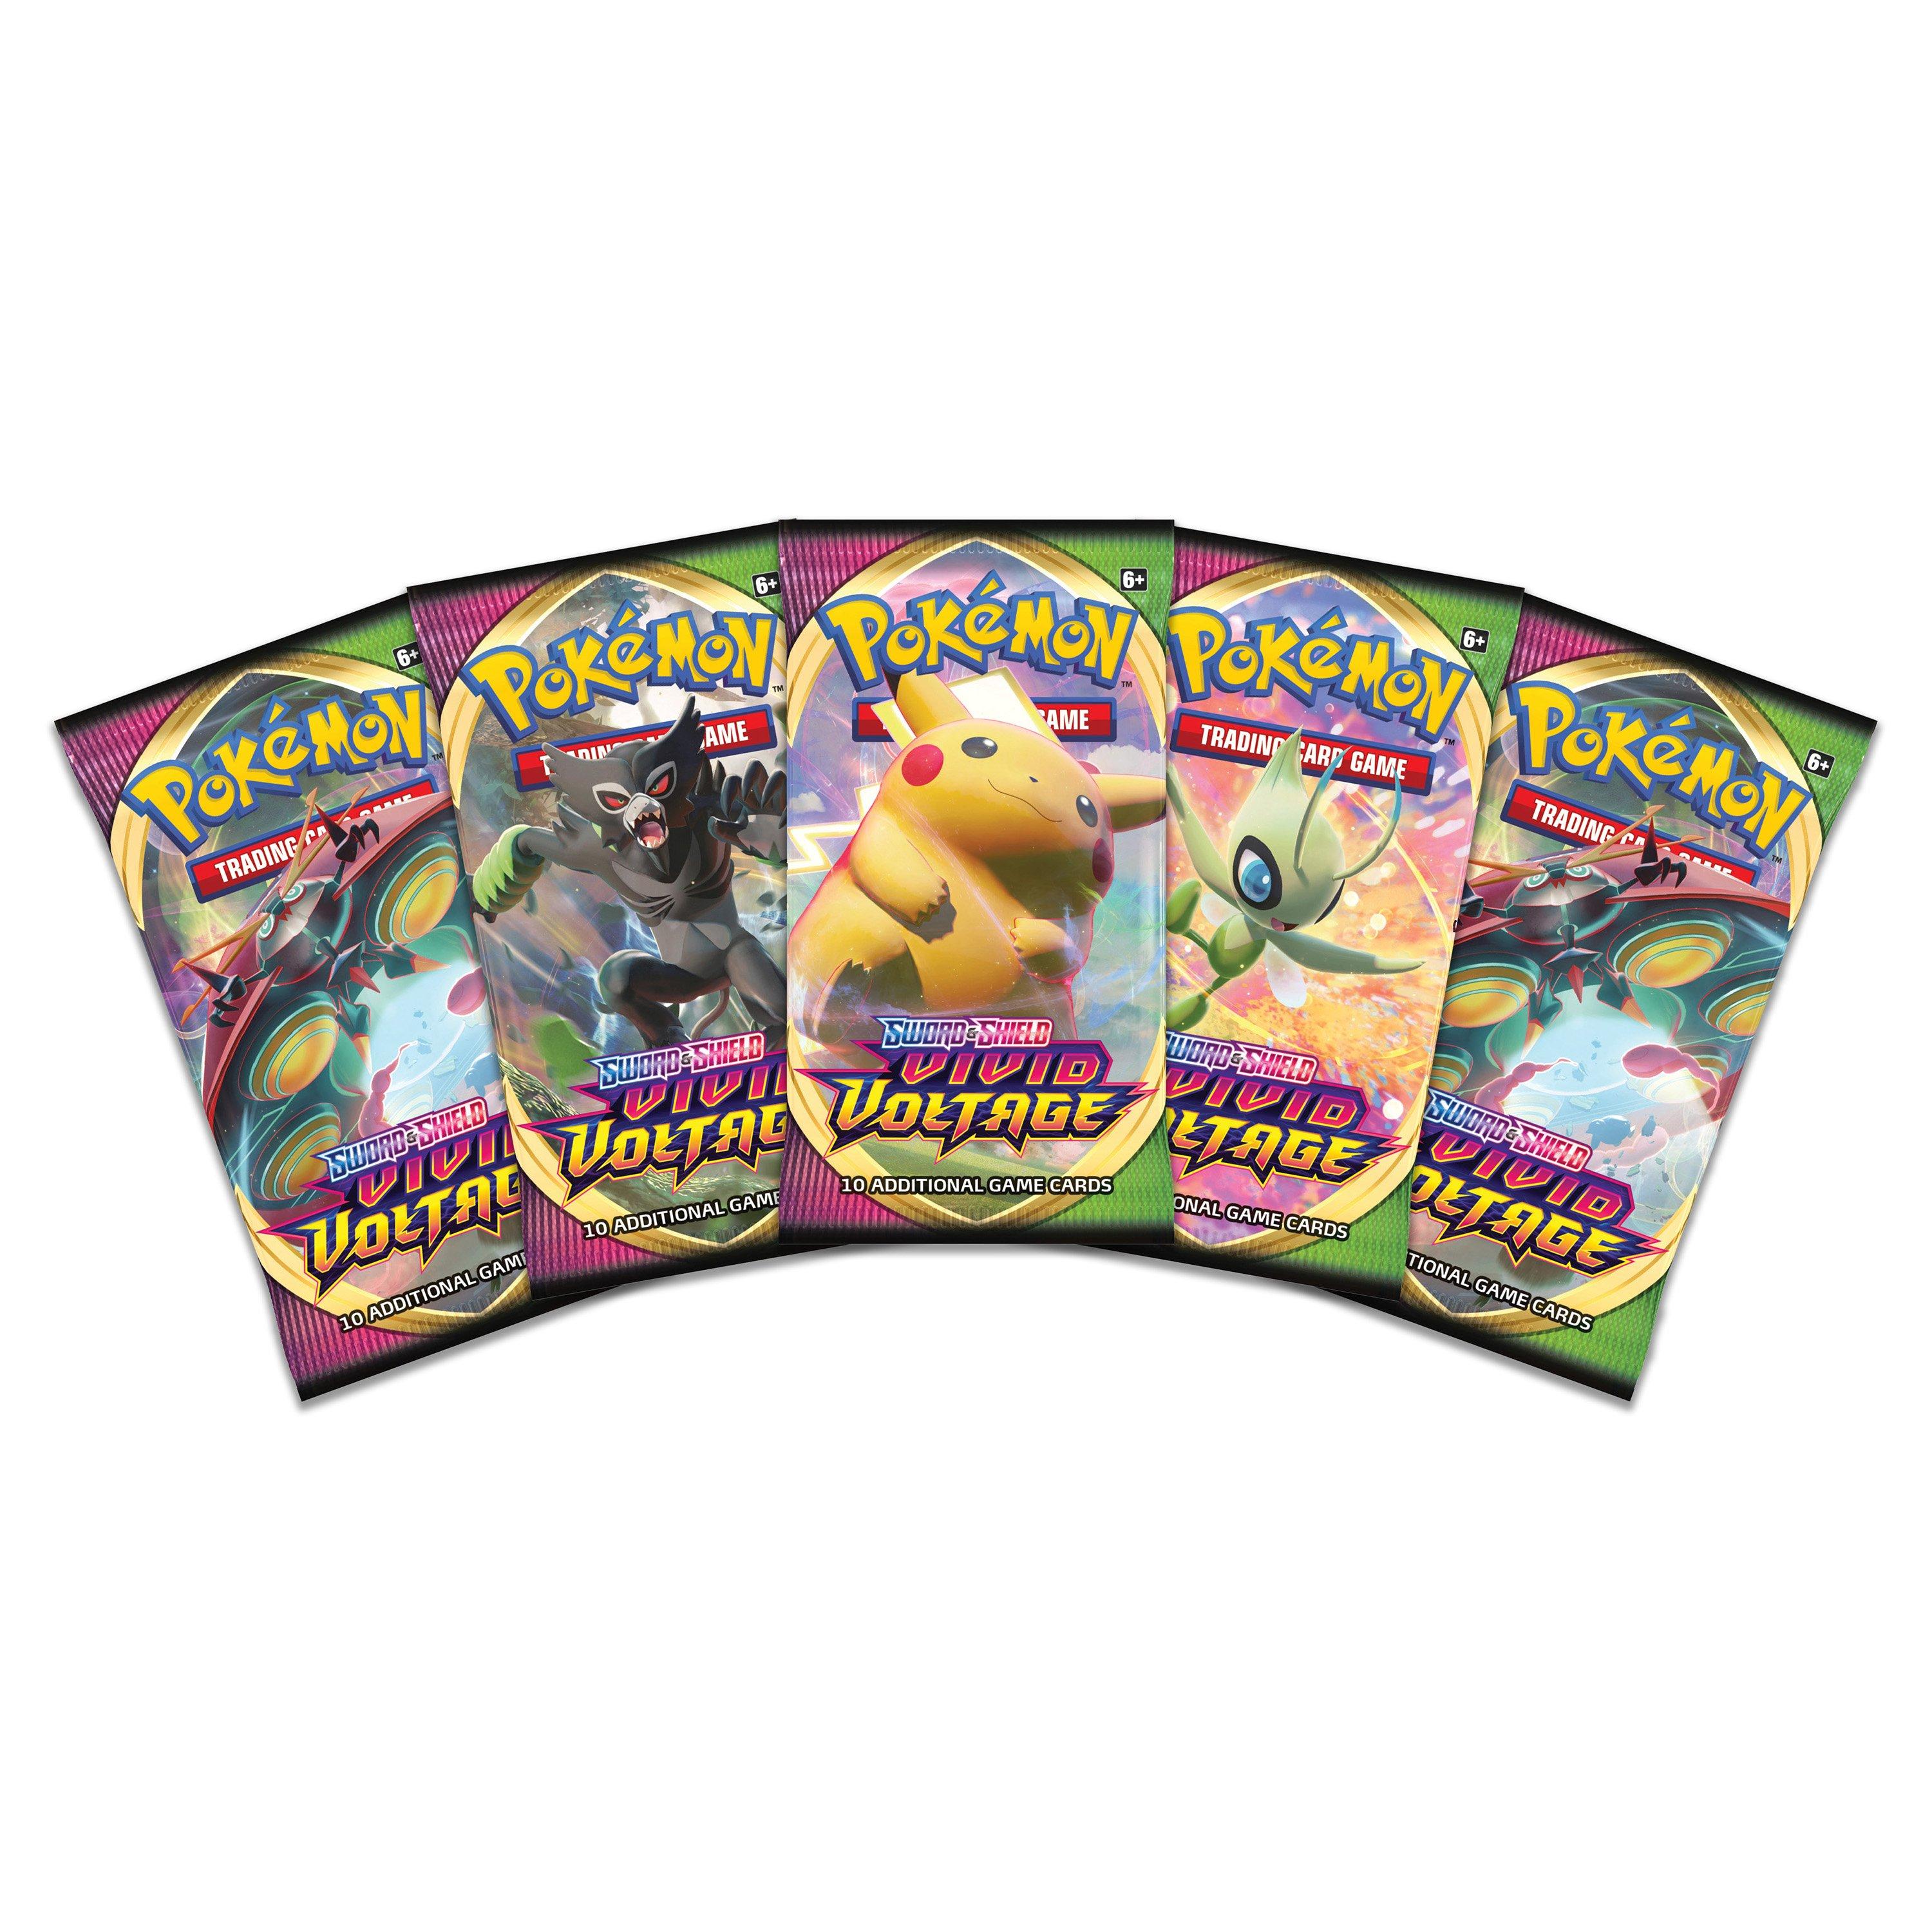 Random Booster Packs/boxes All Pokémon Items Lot Box Of Pokémon 